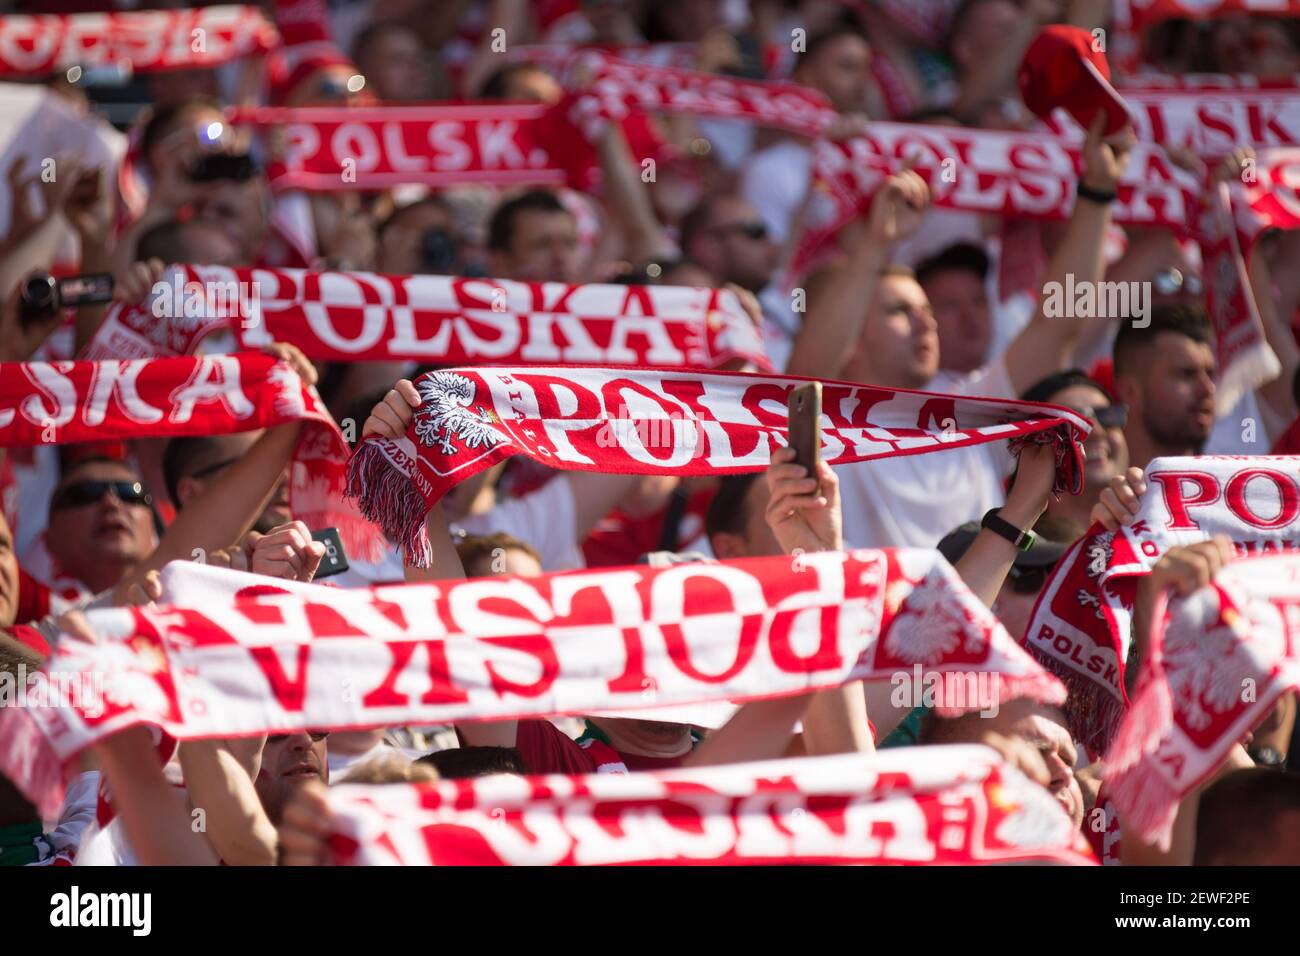 kibice Polski, fani, fans. Photo by Lukasz Skwiot / Foto Olimpik. Stock Photo